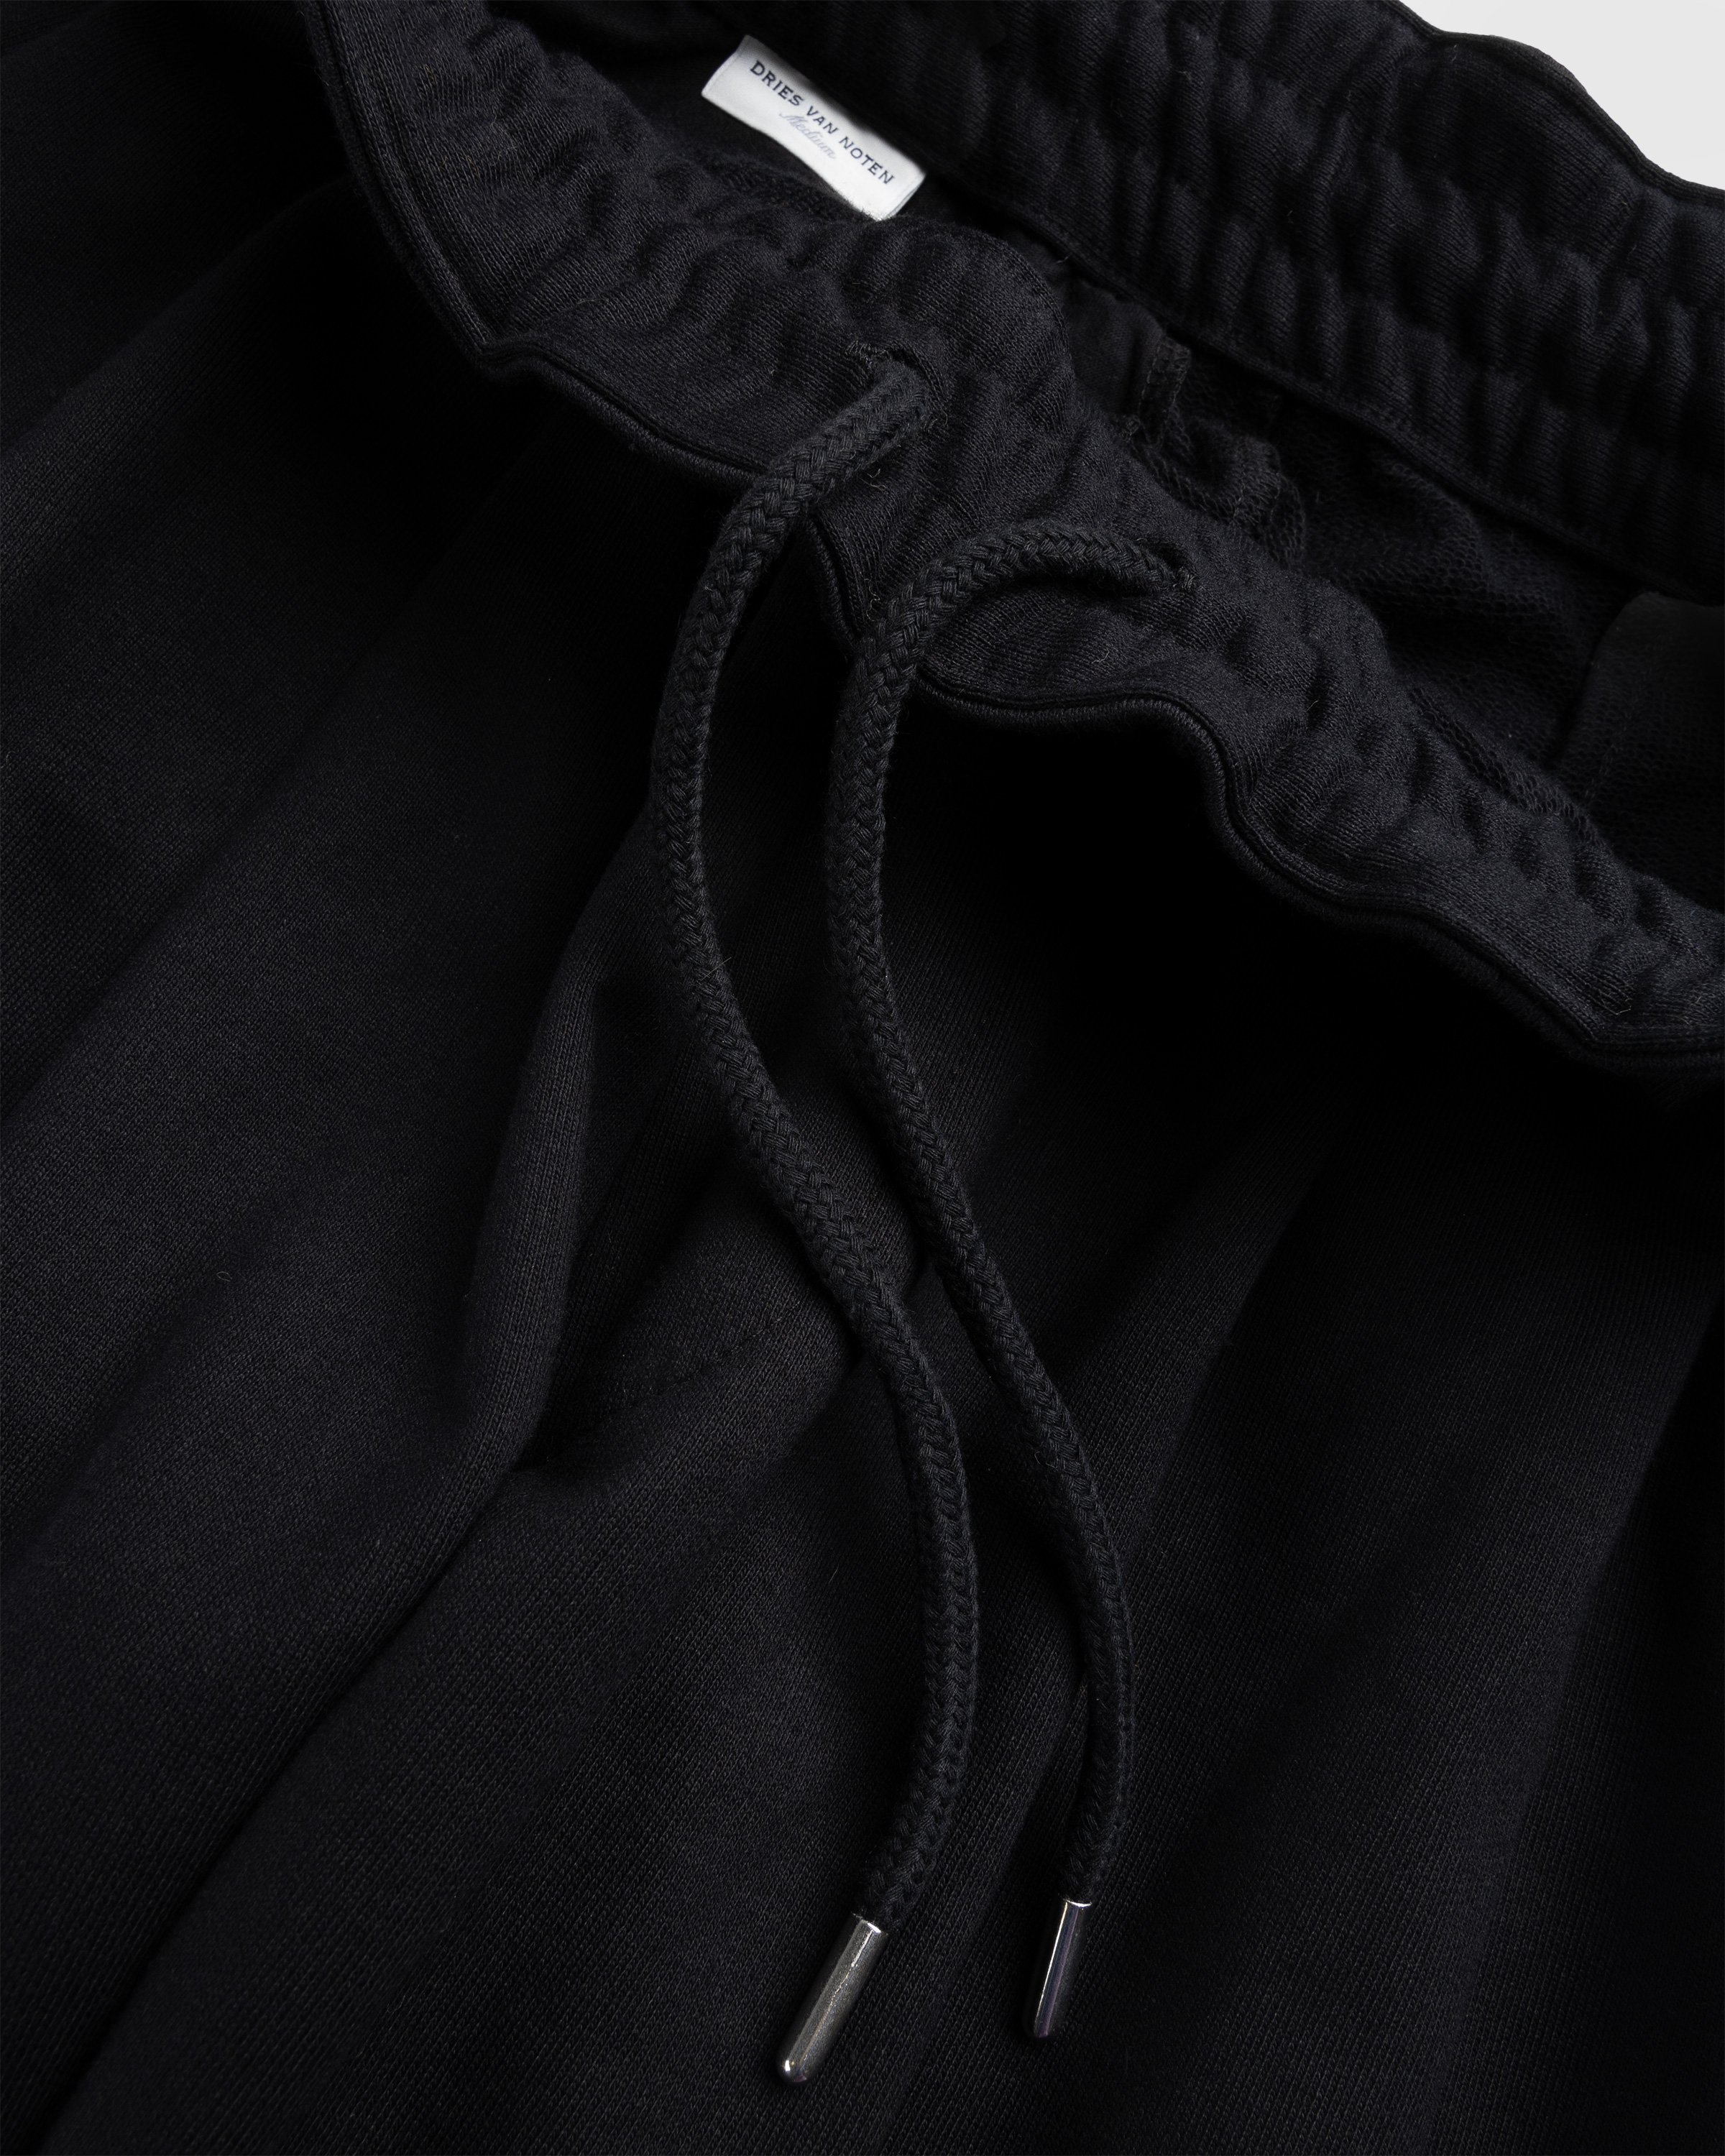 Dries van Noten - Hama Cotton Jersey Pants Black - Clothing - Black - Image 6